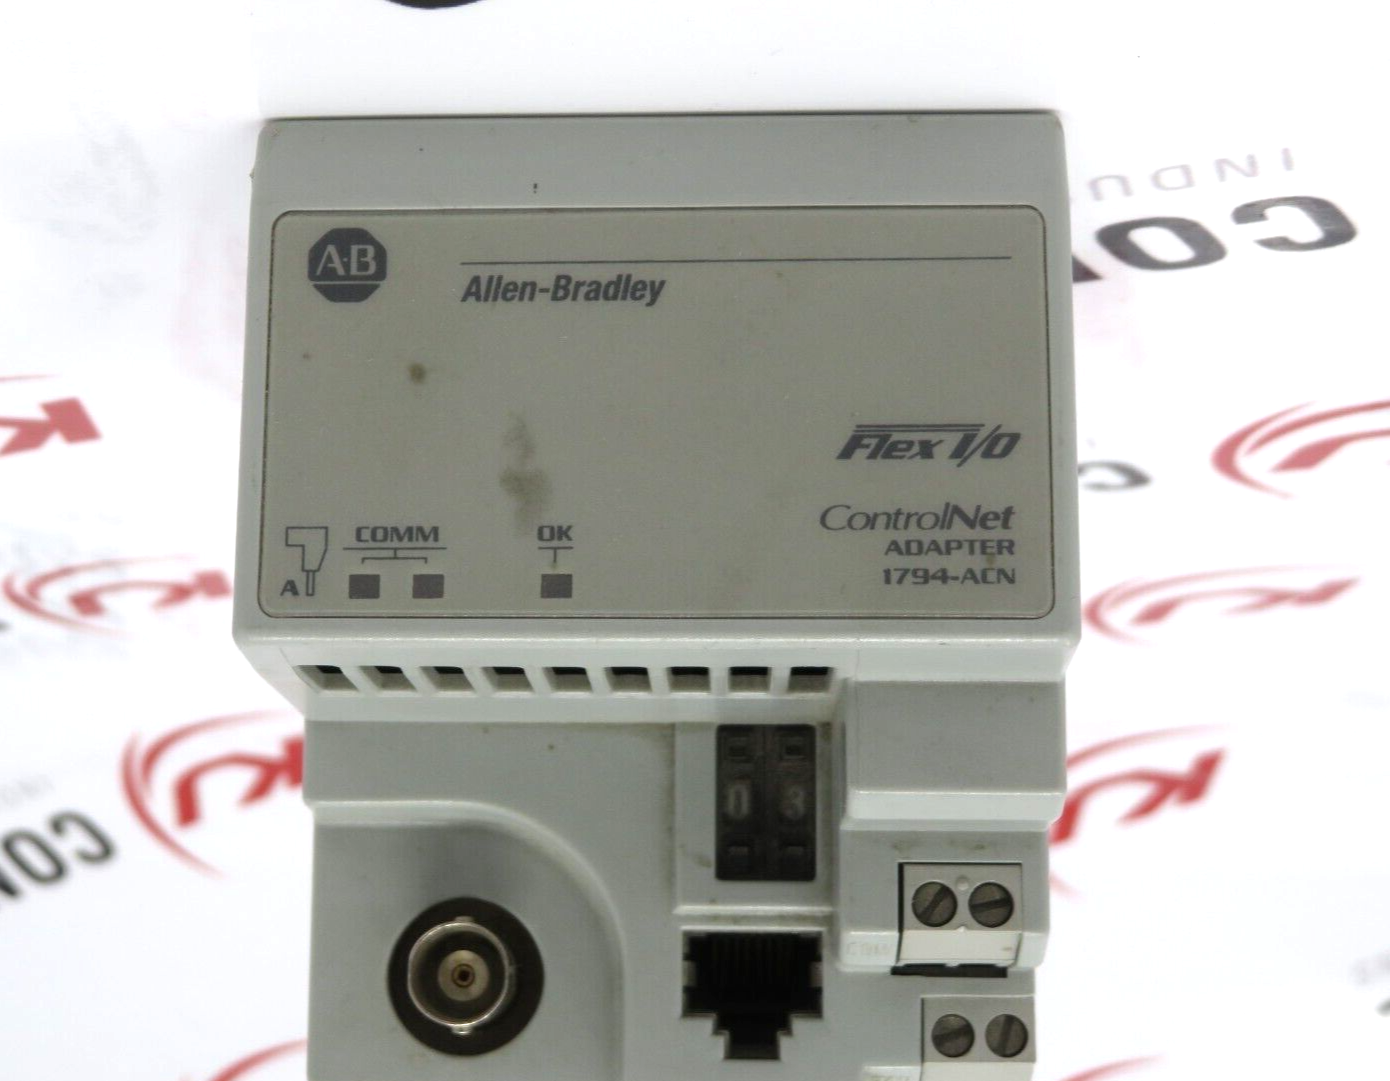 Allen-Bradley 1794-ACN Flex I/O ControlNet Adapter